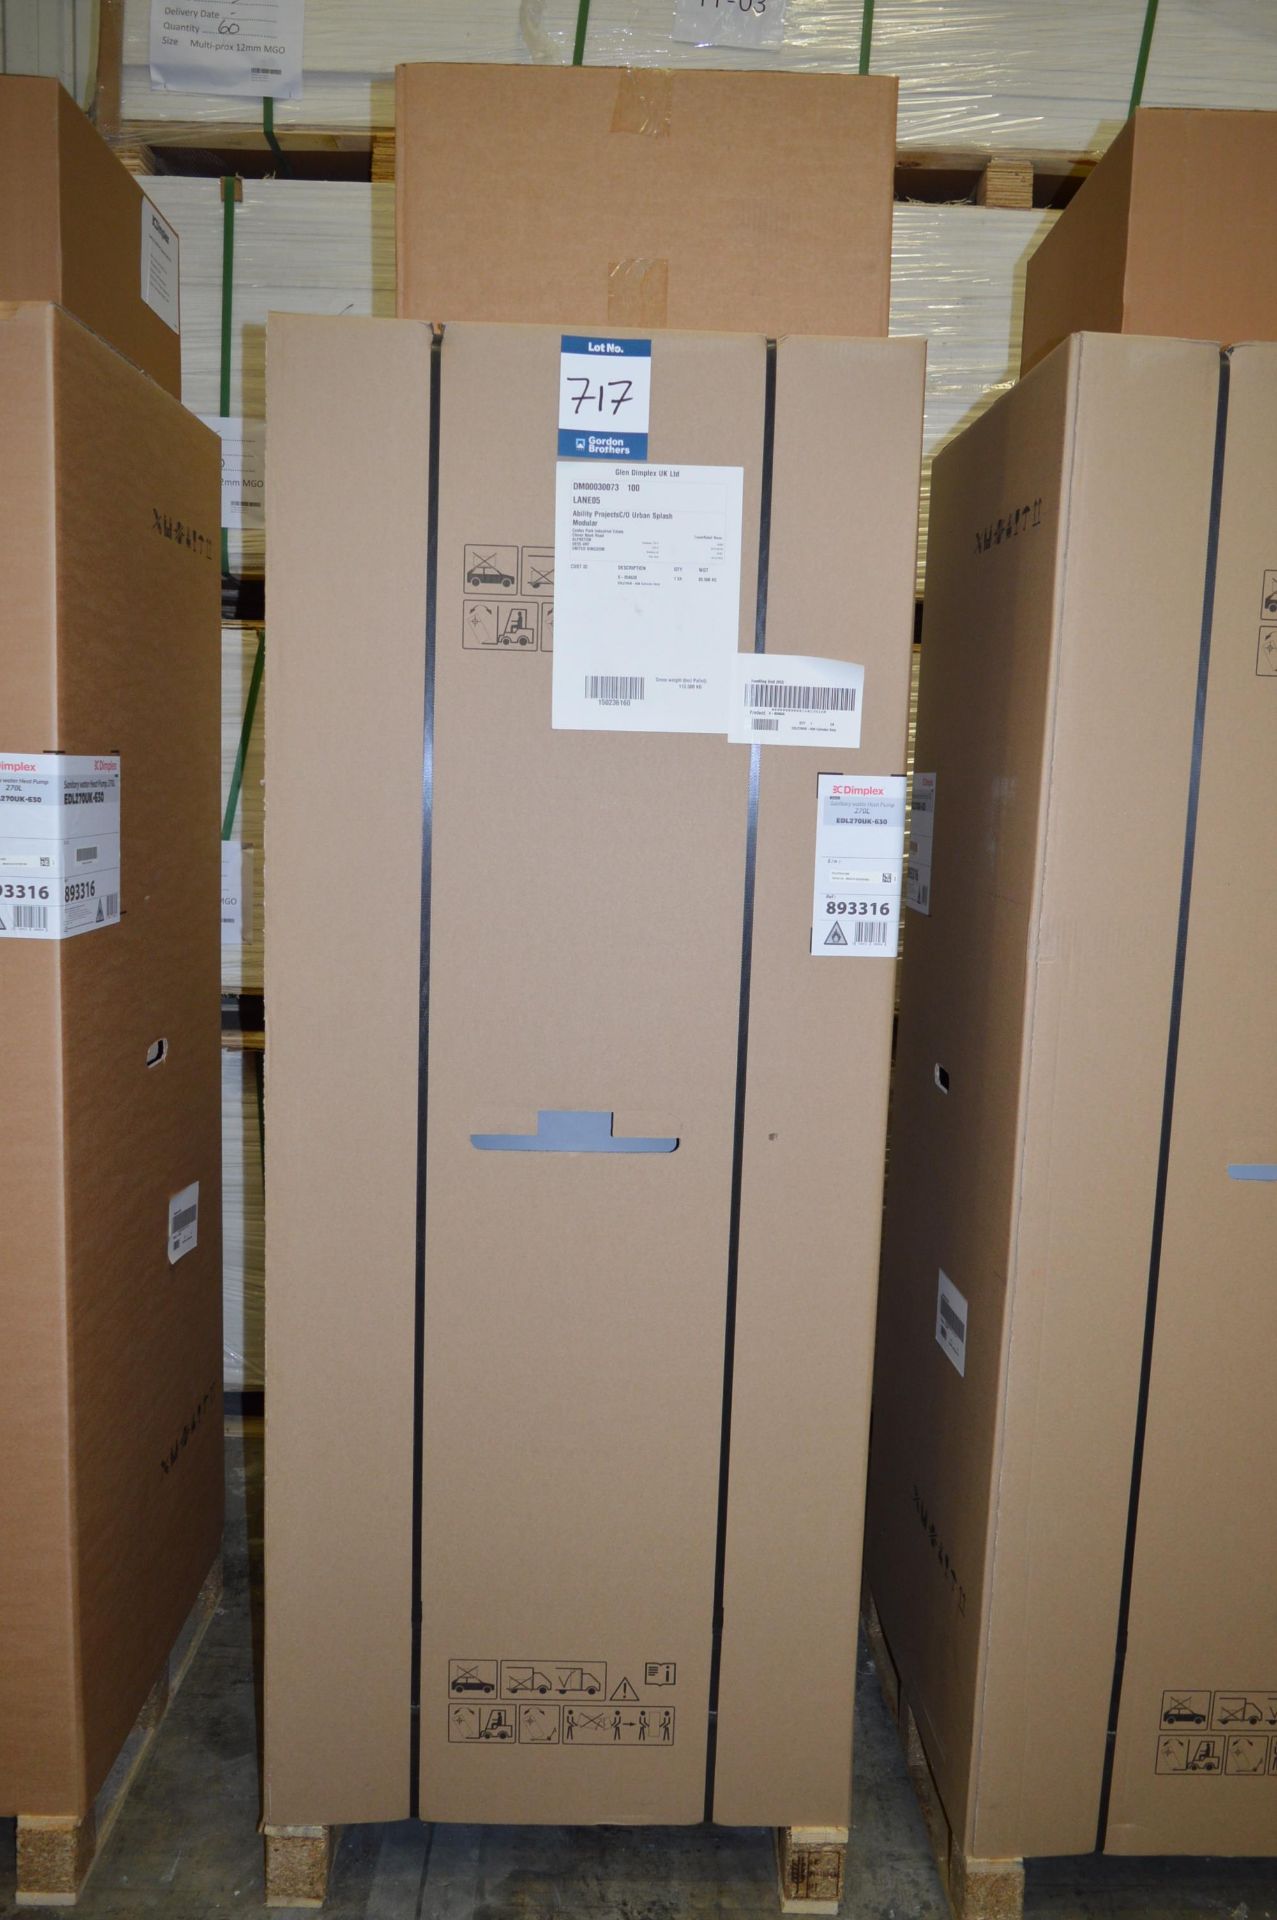 Dimplex, sanitary water heat pump, 270L, Model EDL270UK-630, Serial No. 893316-220255369 (packaged)